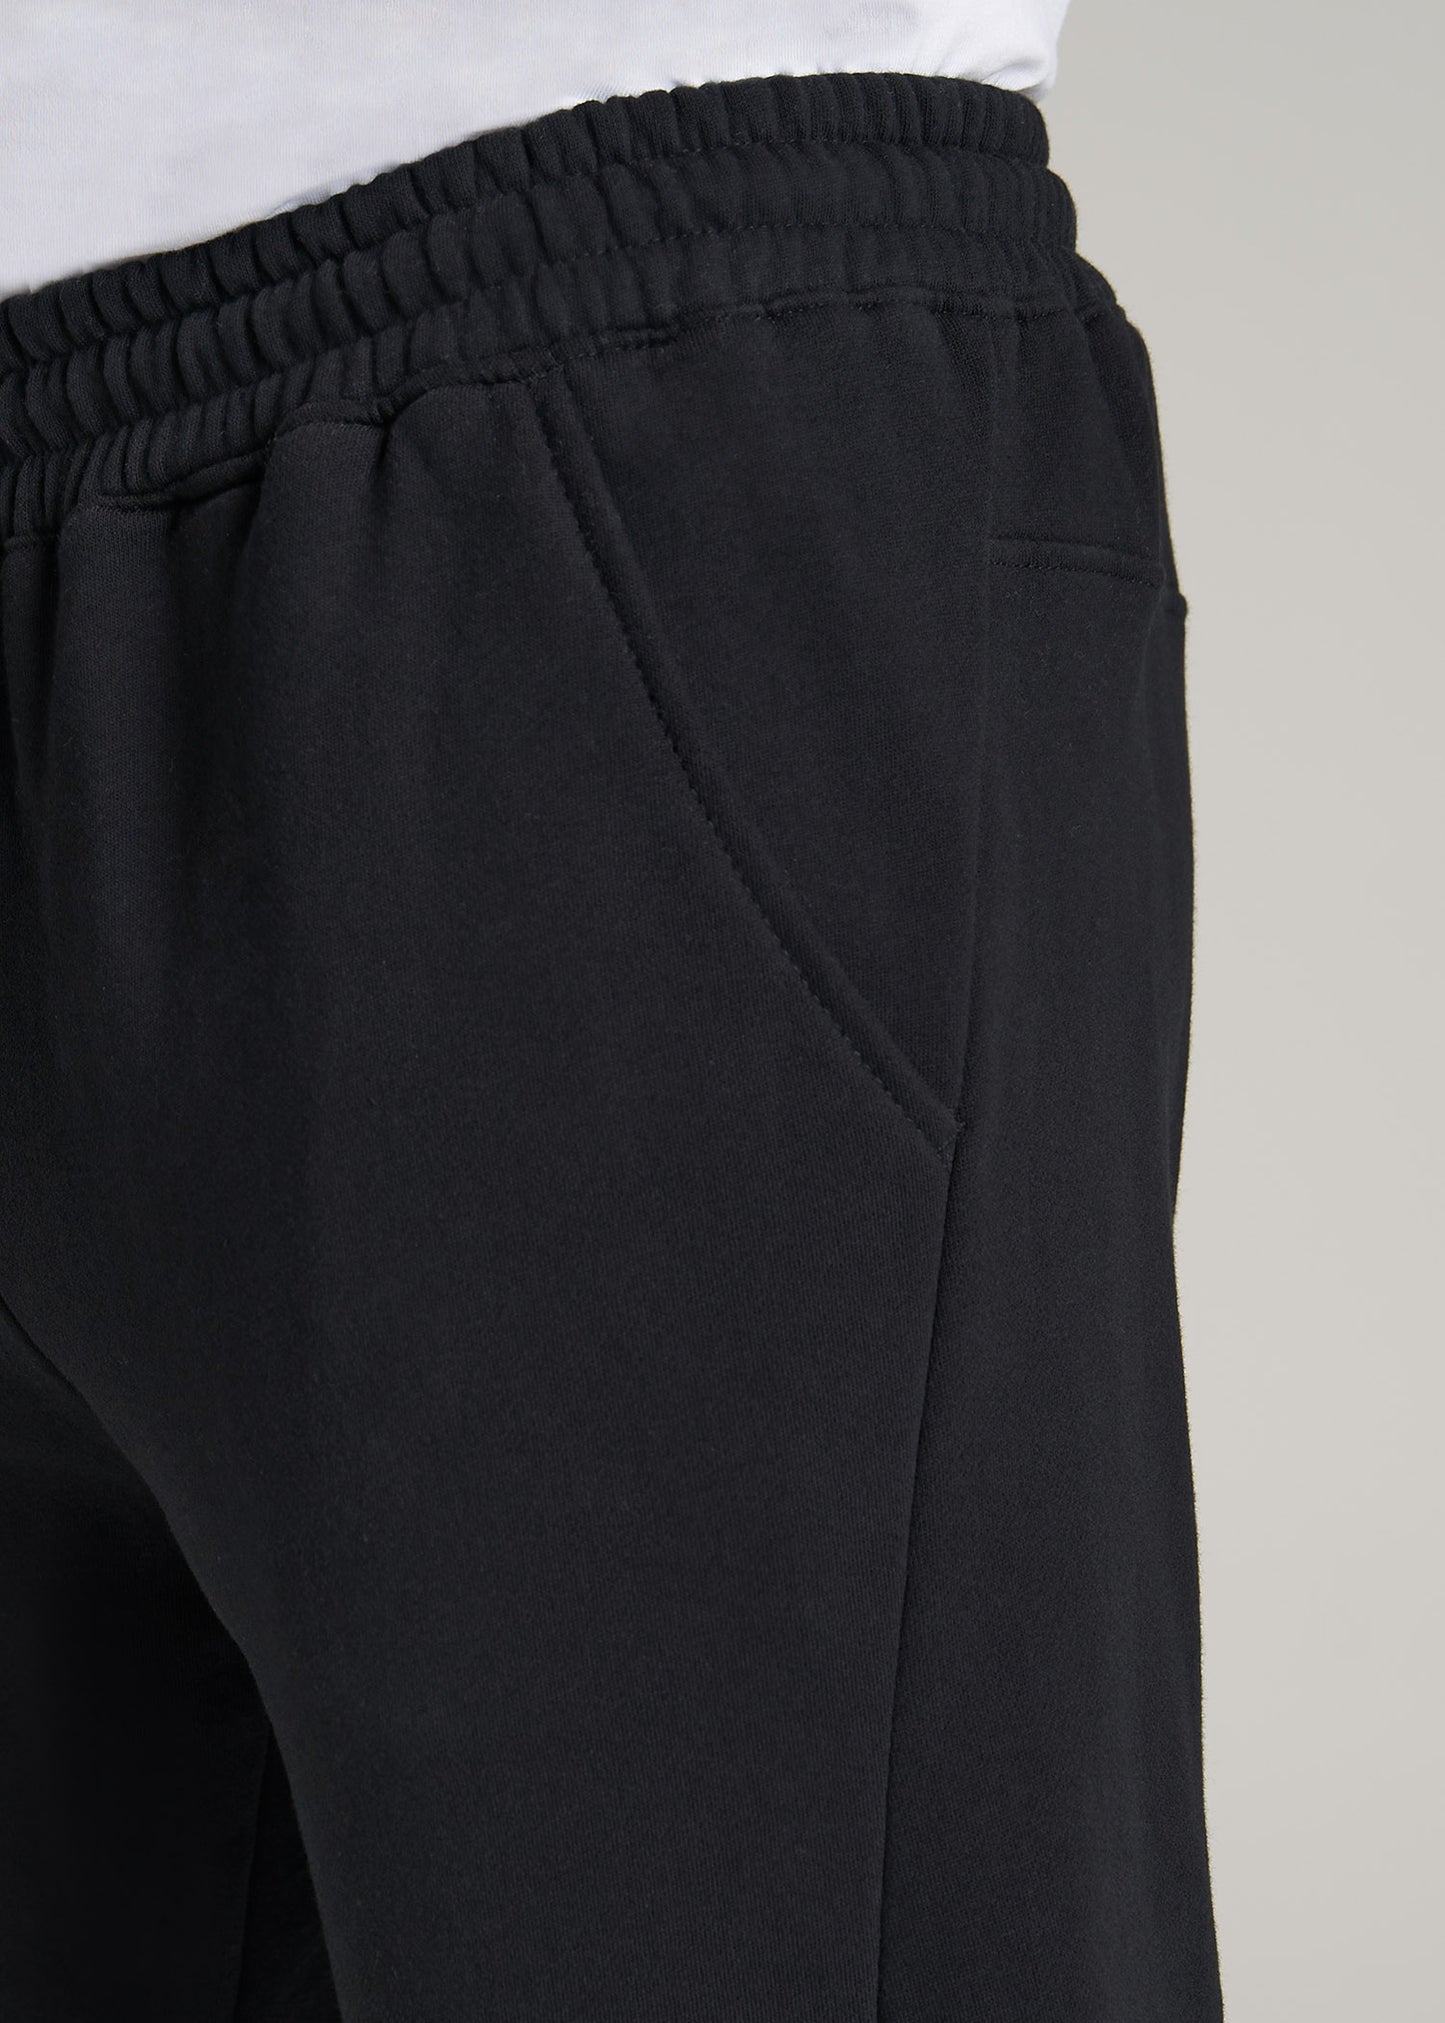 Black Sweatpants for Tall Guys: Men's Tall Fleece Black Jogger ...